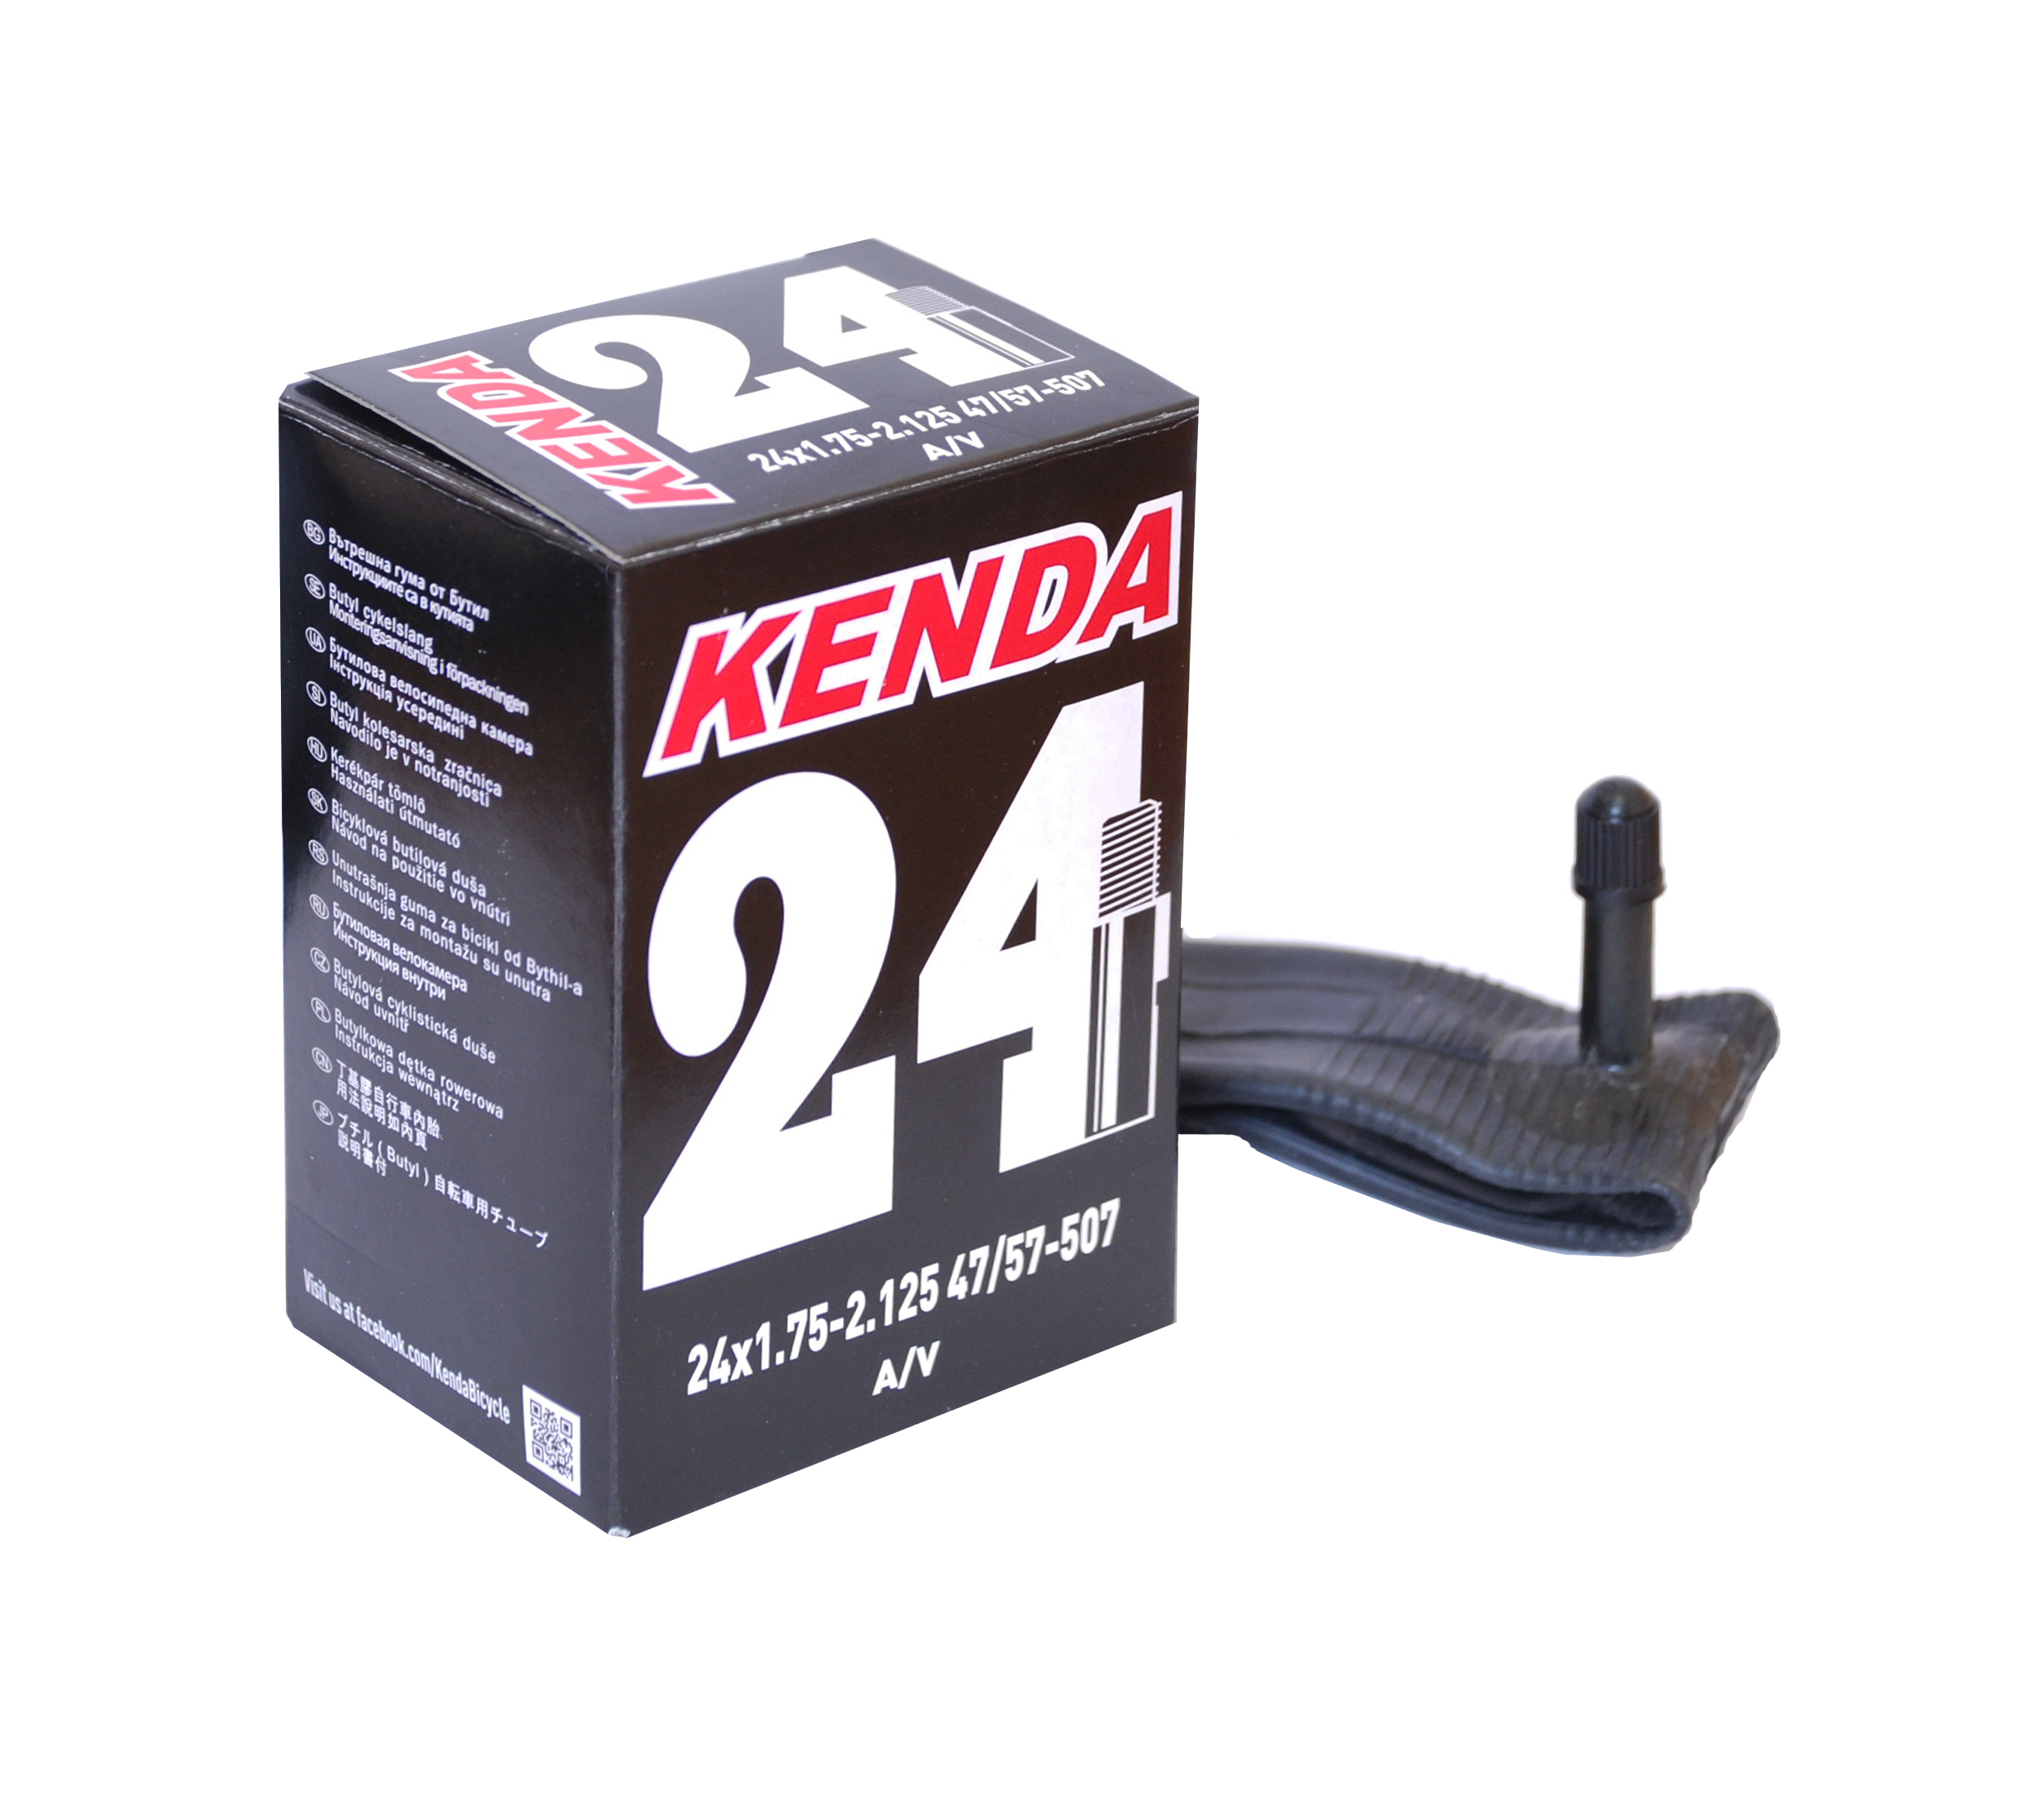 Камера KENDA 24" х 1.75-2.125", 47/57-507 авто